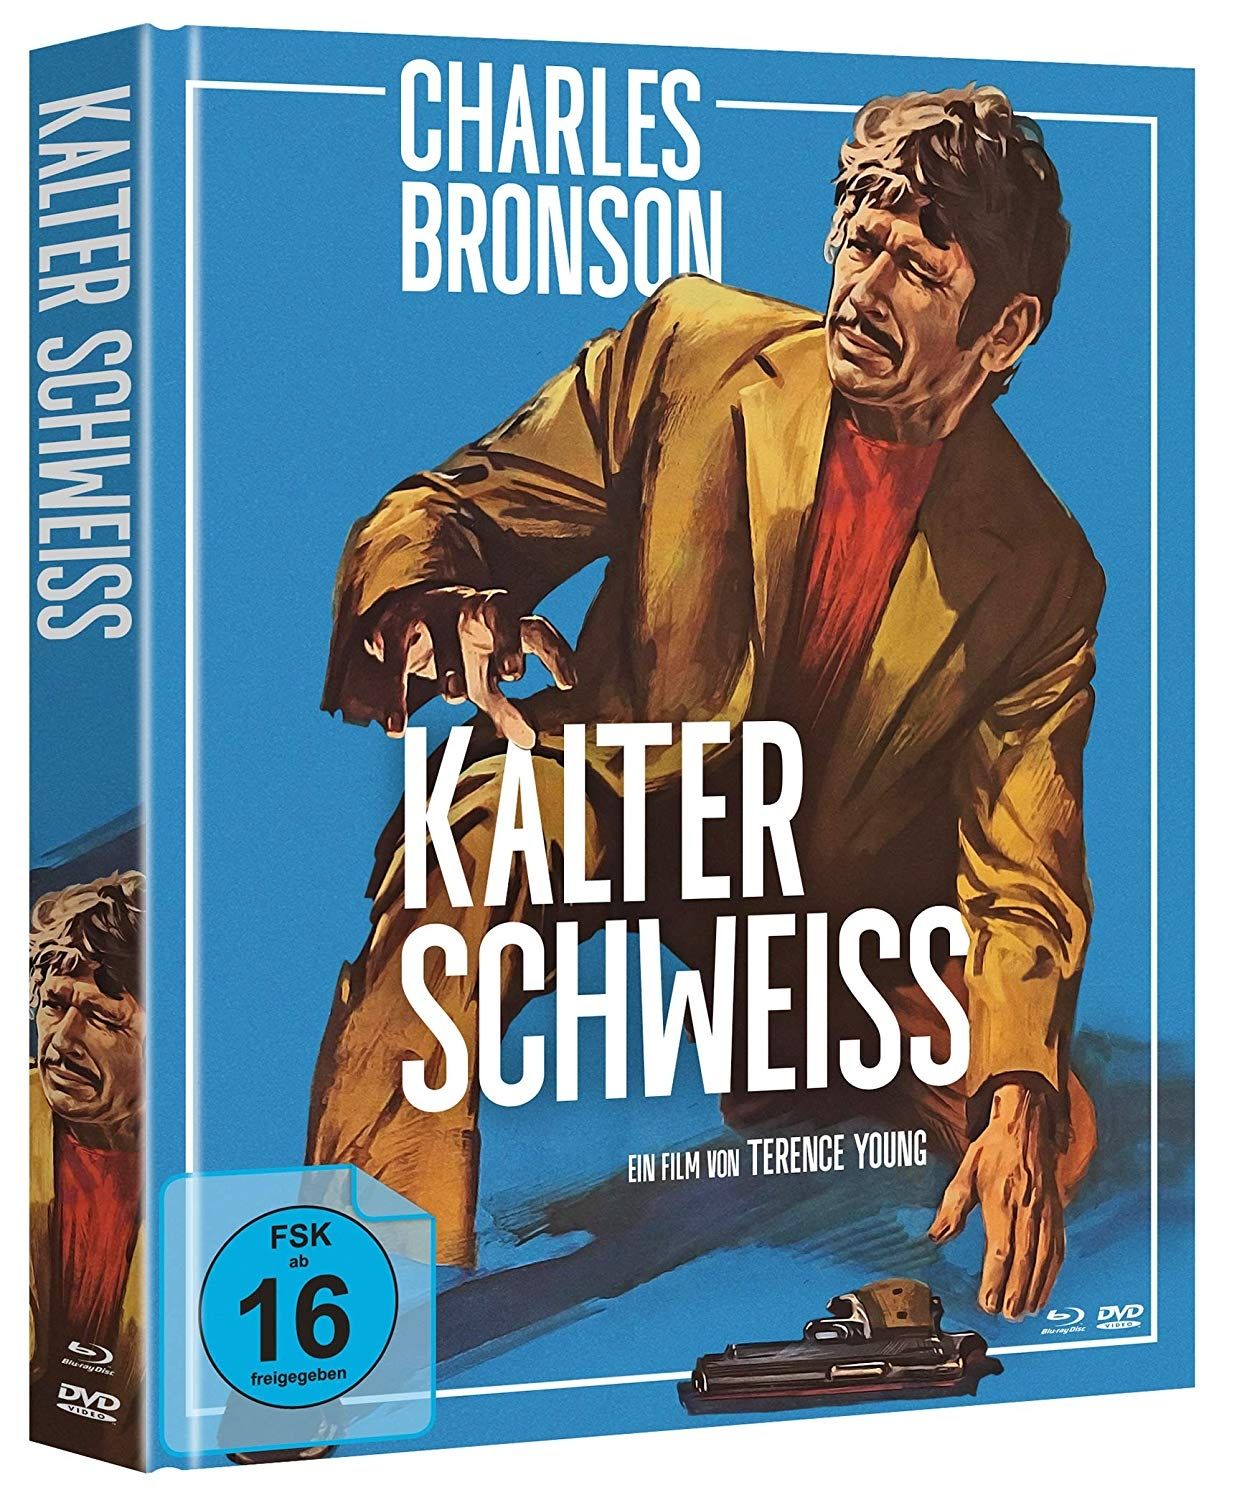 Kalter Schweiß (Lim. Uncut Mediabook - Cover A) (DVD + BLURAY)